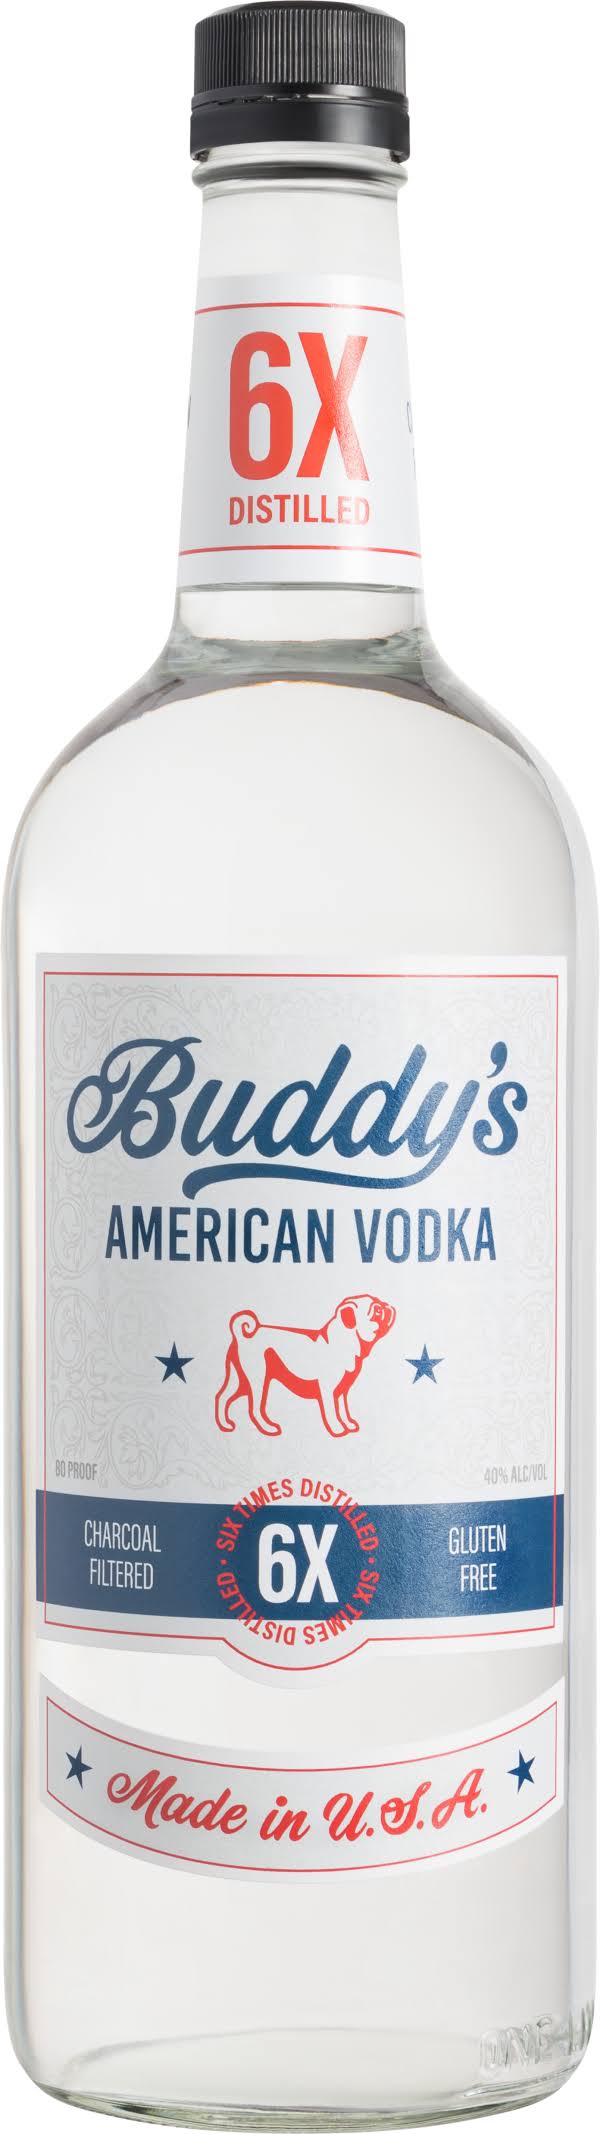 Buddy's American Vodka 1 Liter